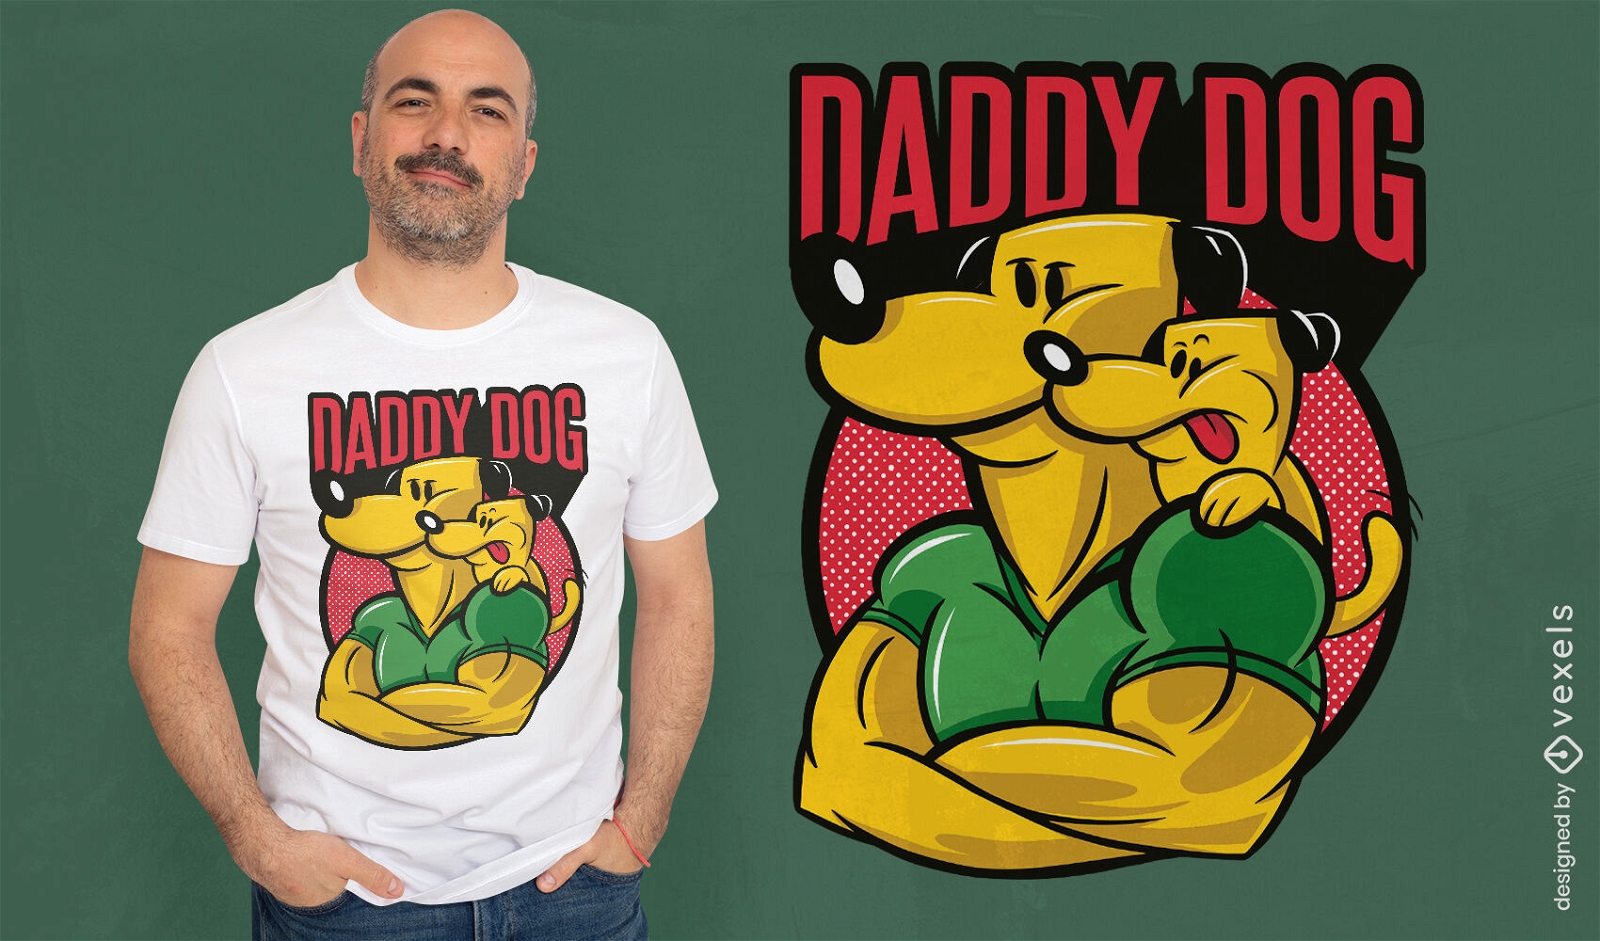 Daddy dog t-shirt design